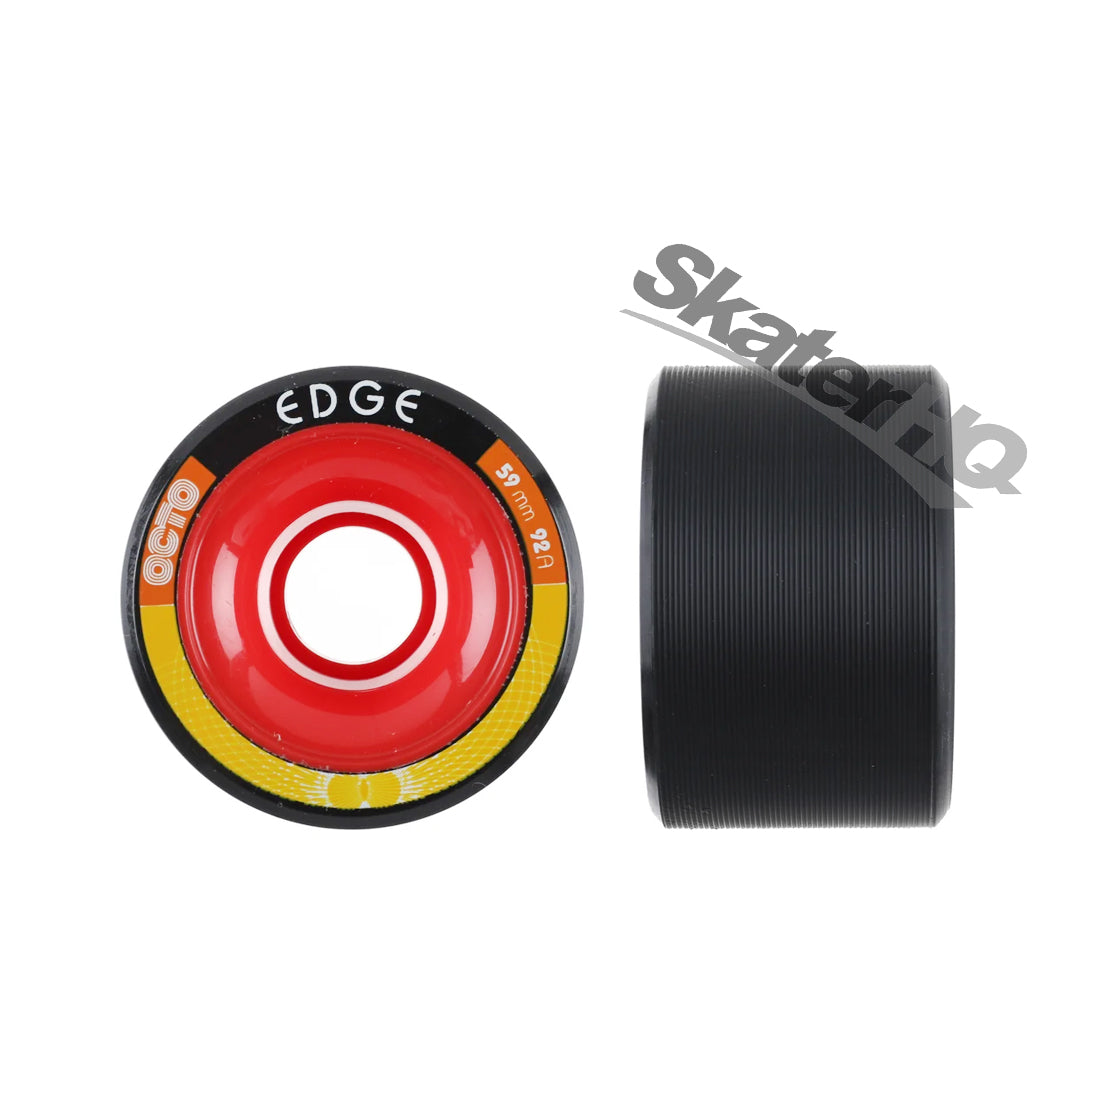 Octo Edge 59mm 92a 8pk - Black/Red Roller Skate Wheels